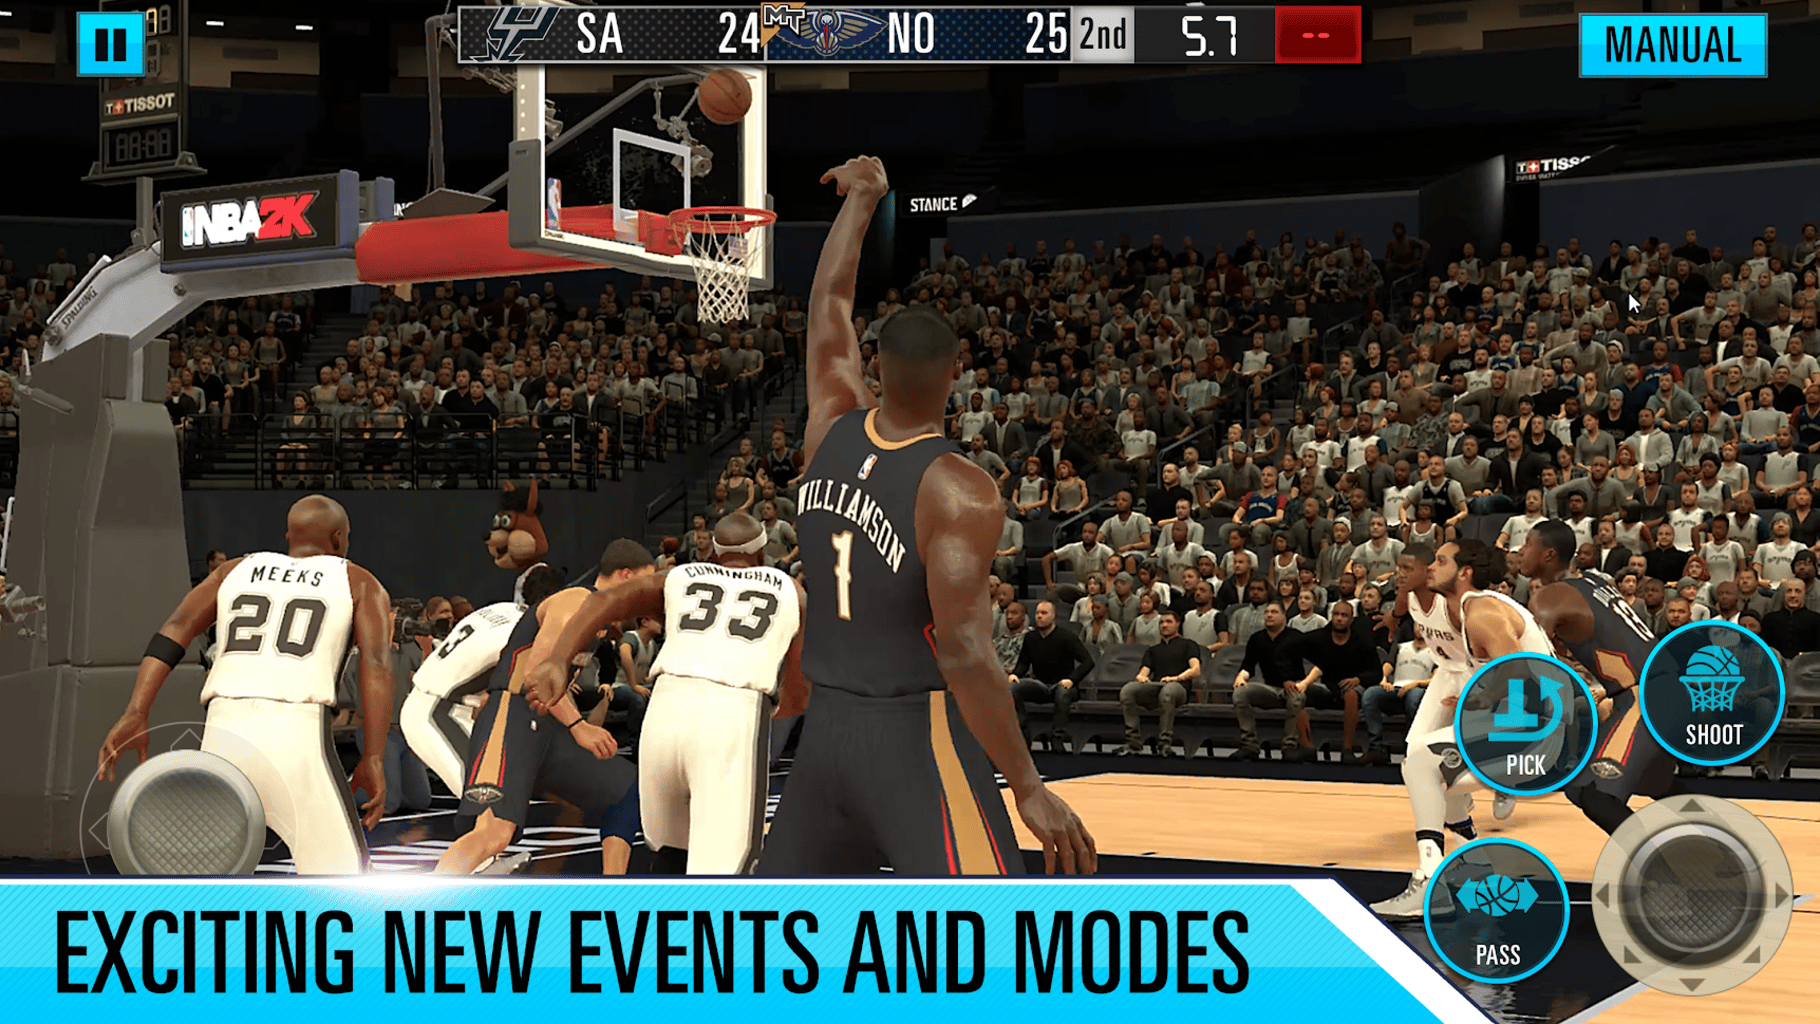 NBA 2K Mobile Basketball screenshot